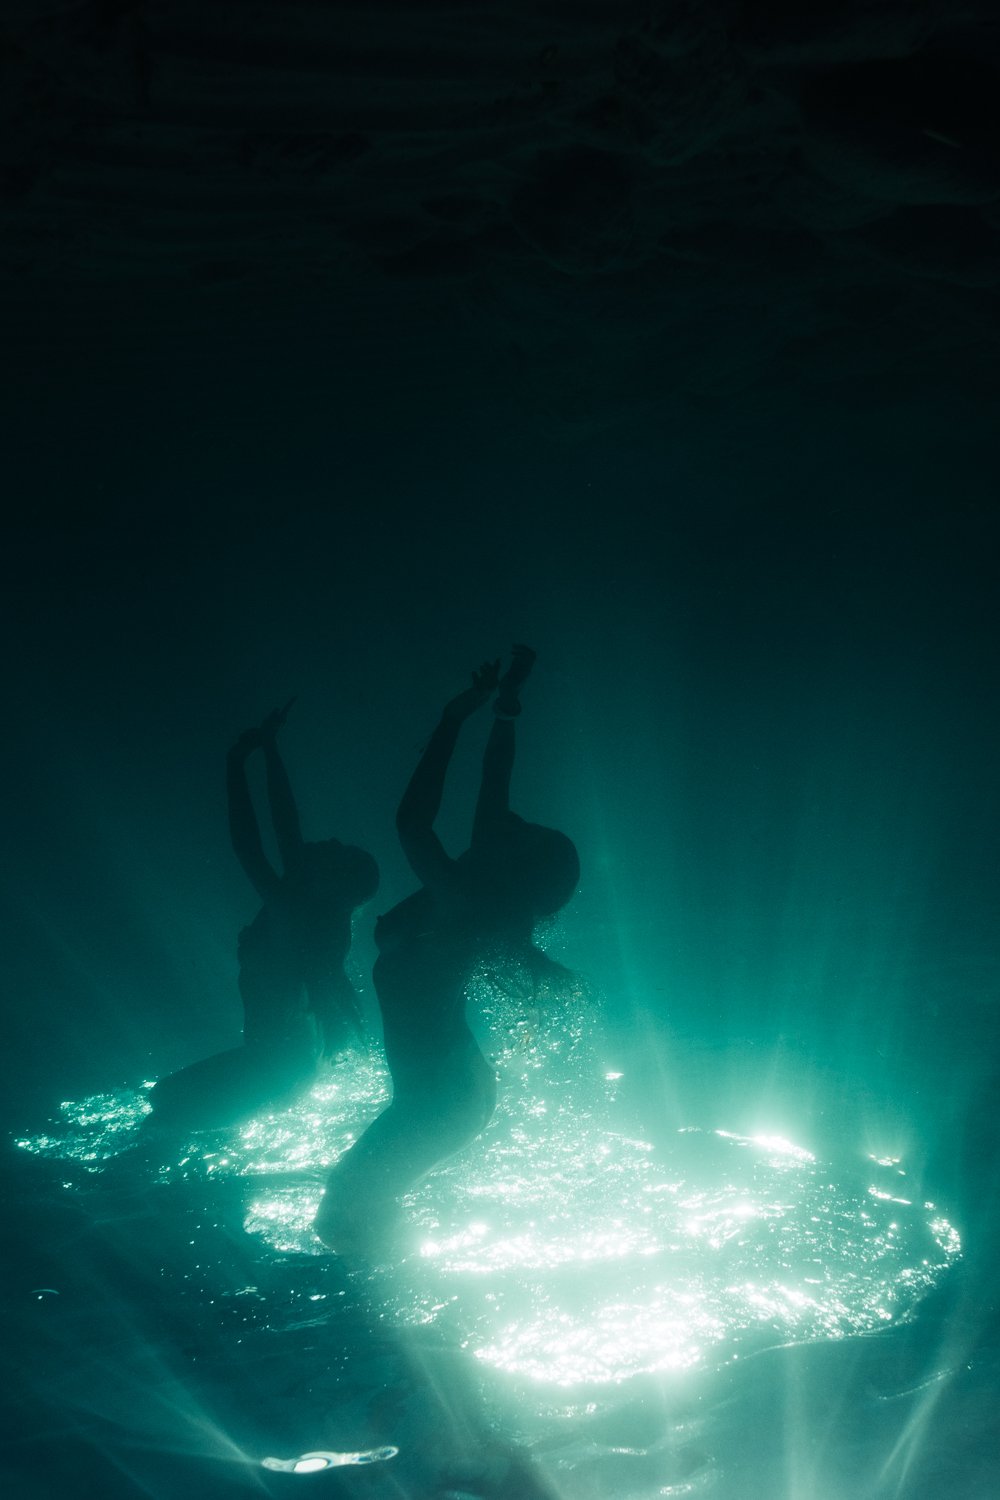 siren sirens corse corsica underwater photography photographe sous leau mermaid femme woman women nude nue fine art photography Krista Espino ajaccio sea Mediterranean france travel-6.jpg